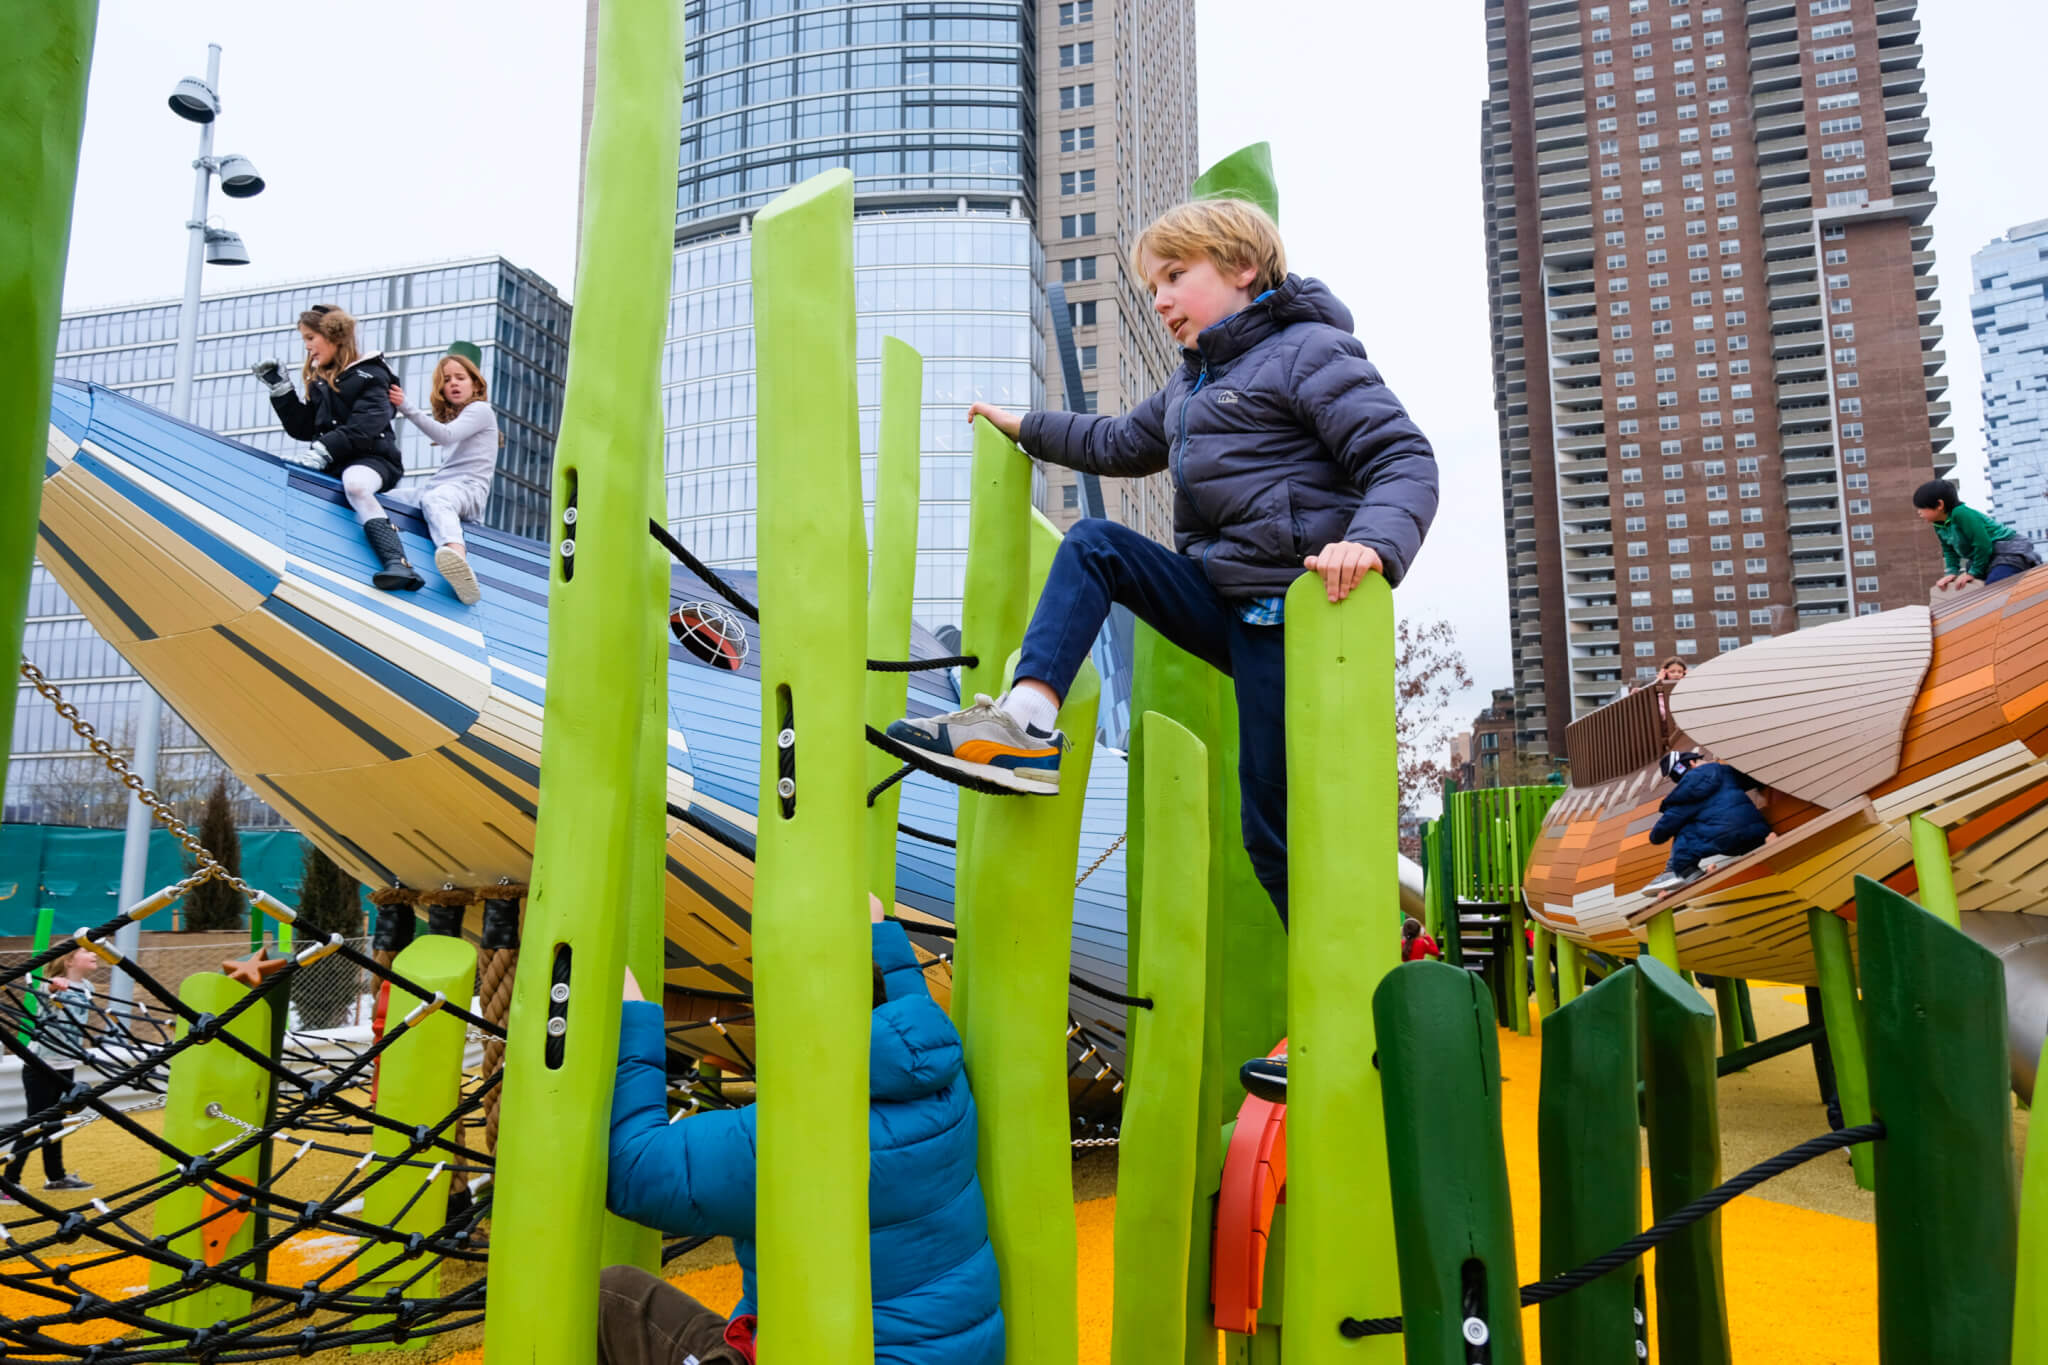 Children climbing on a playground